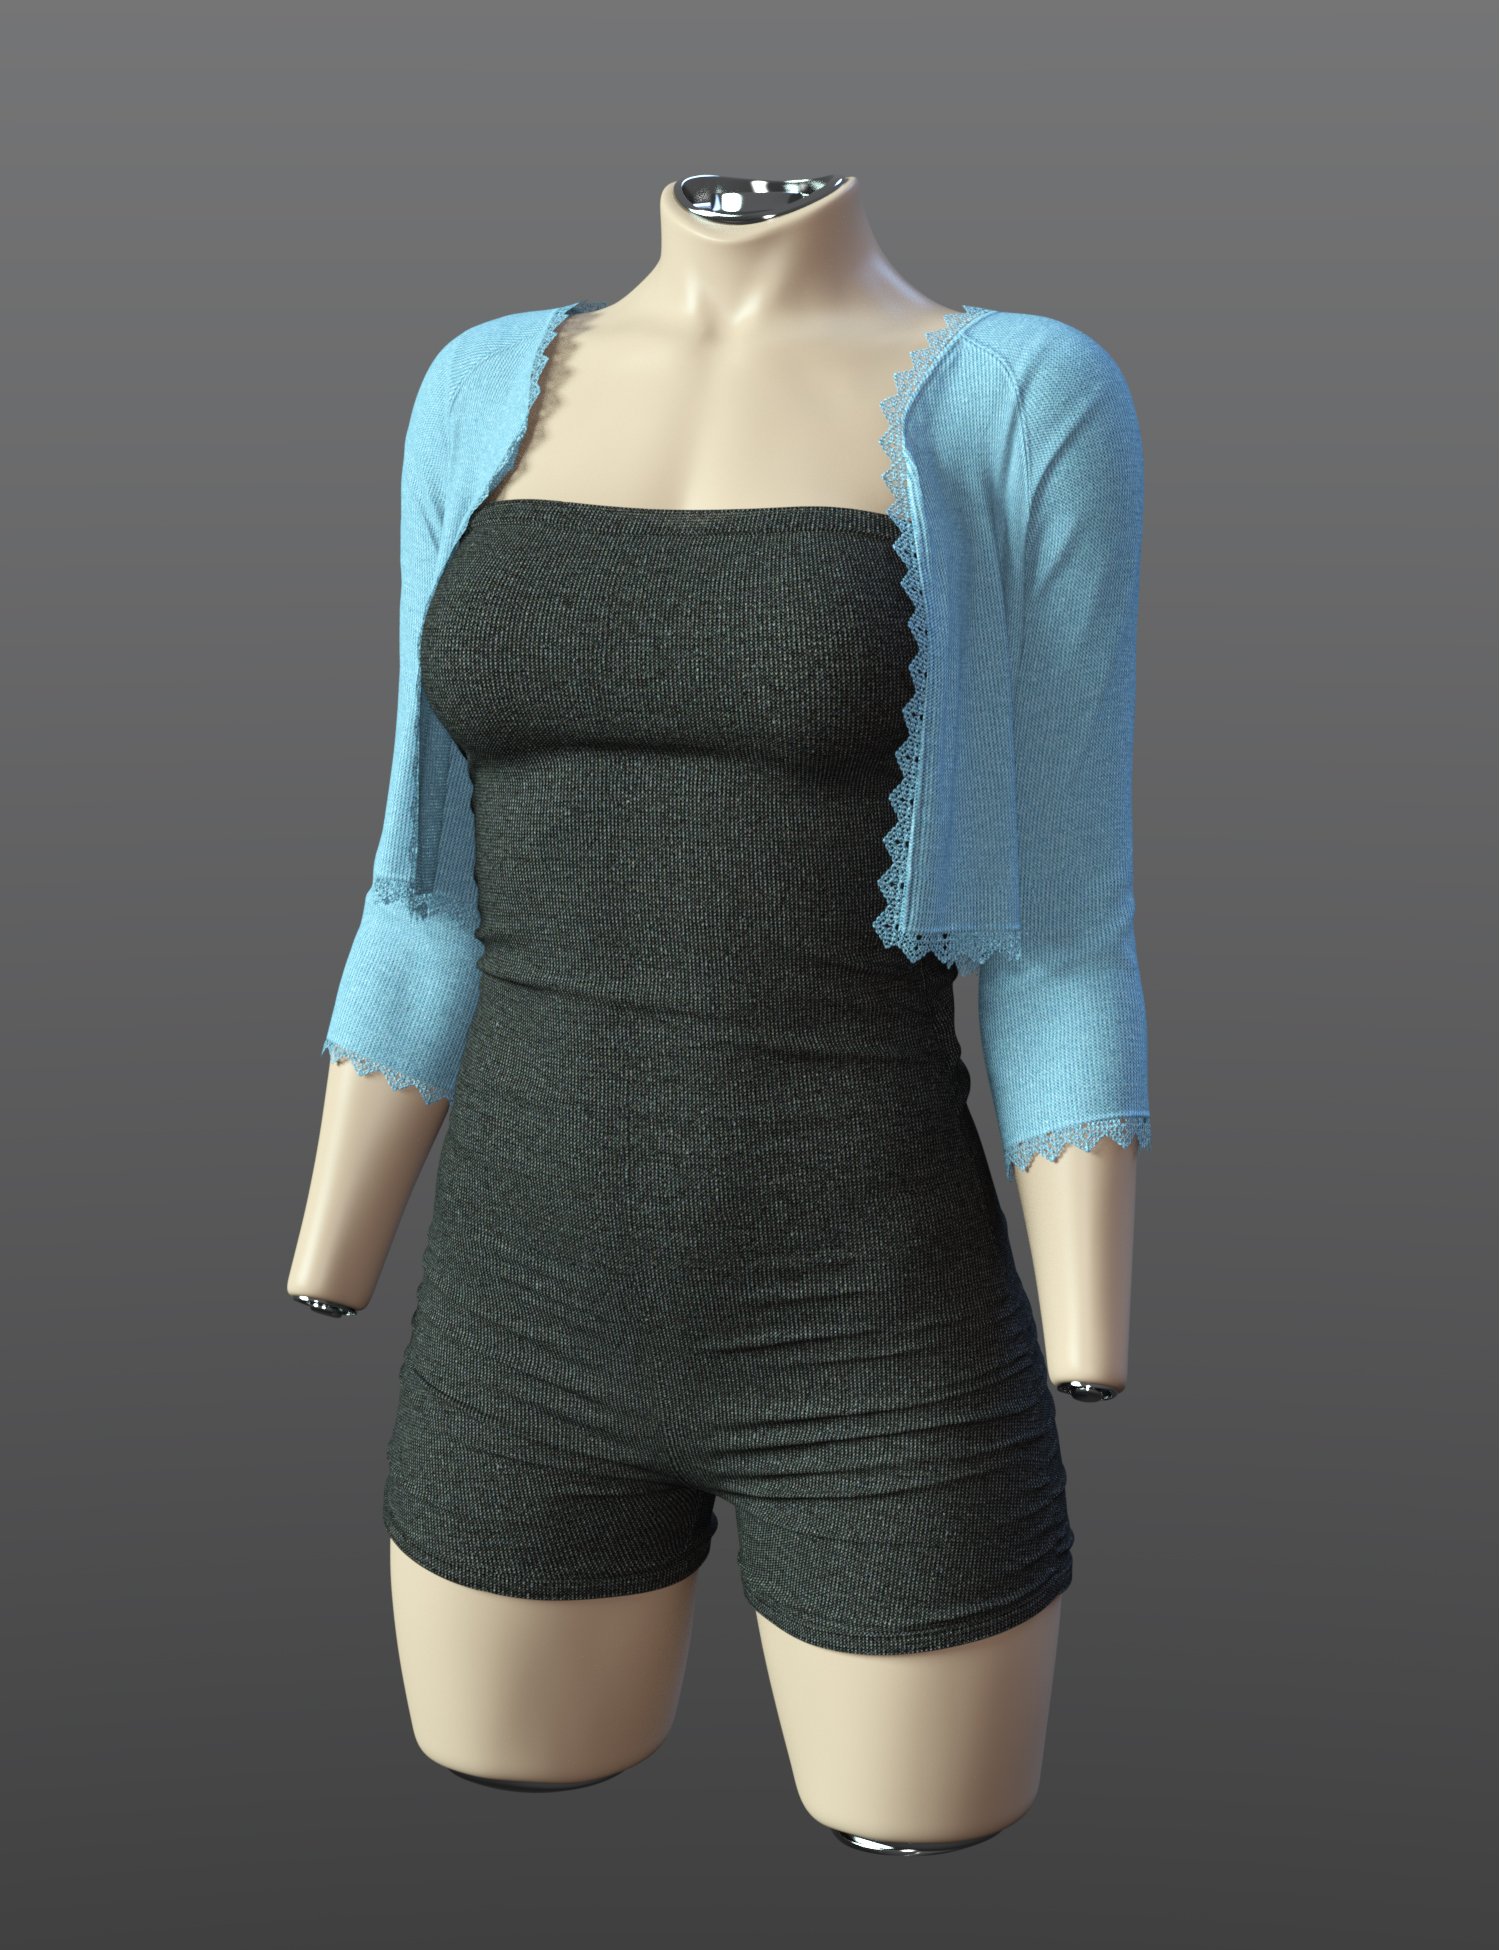 dForce SPR Short Sleeved Casual Suit for Genesis 9 by: Sprite, 3D Models by Daz 3D